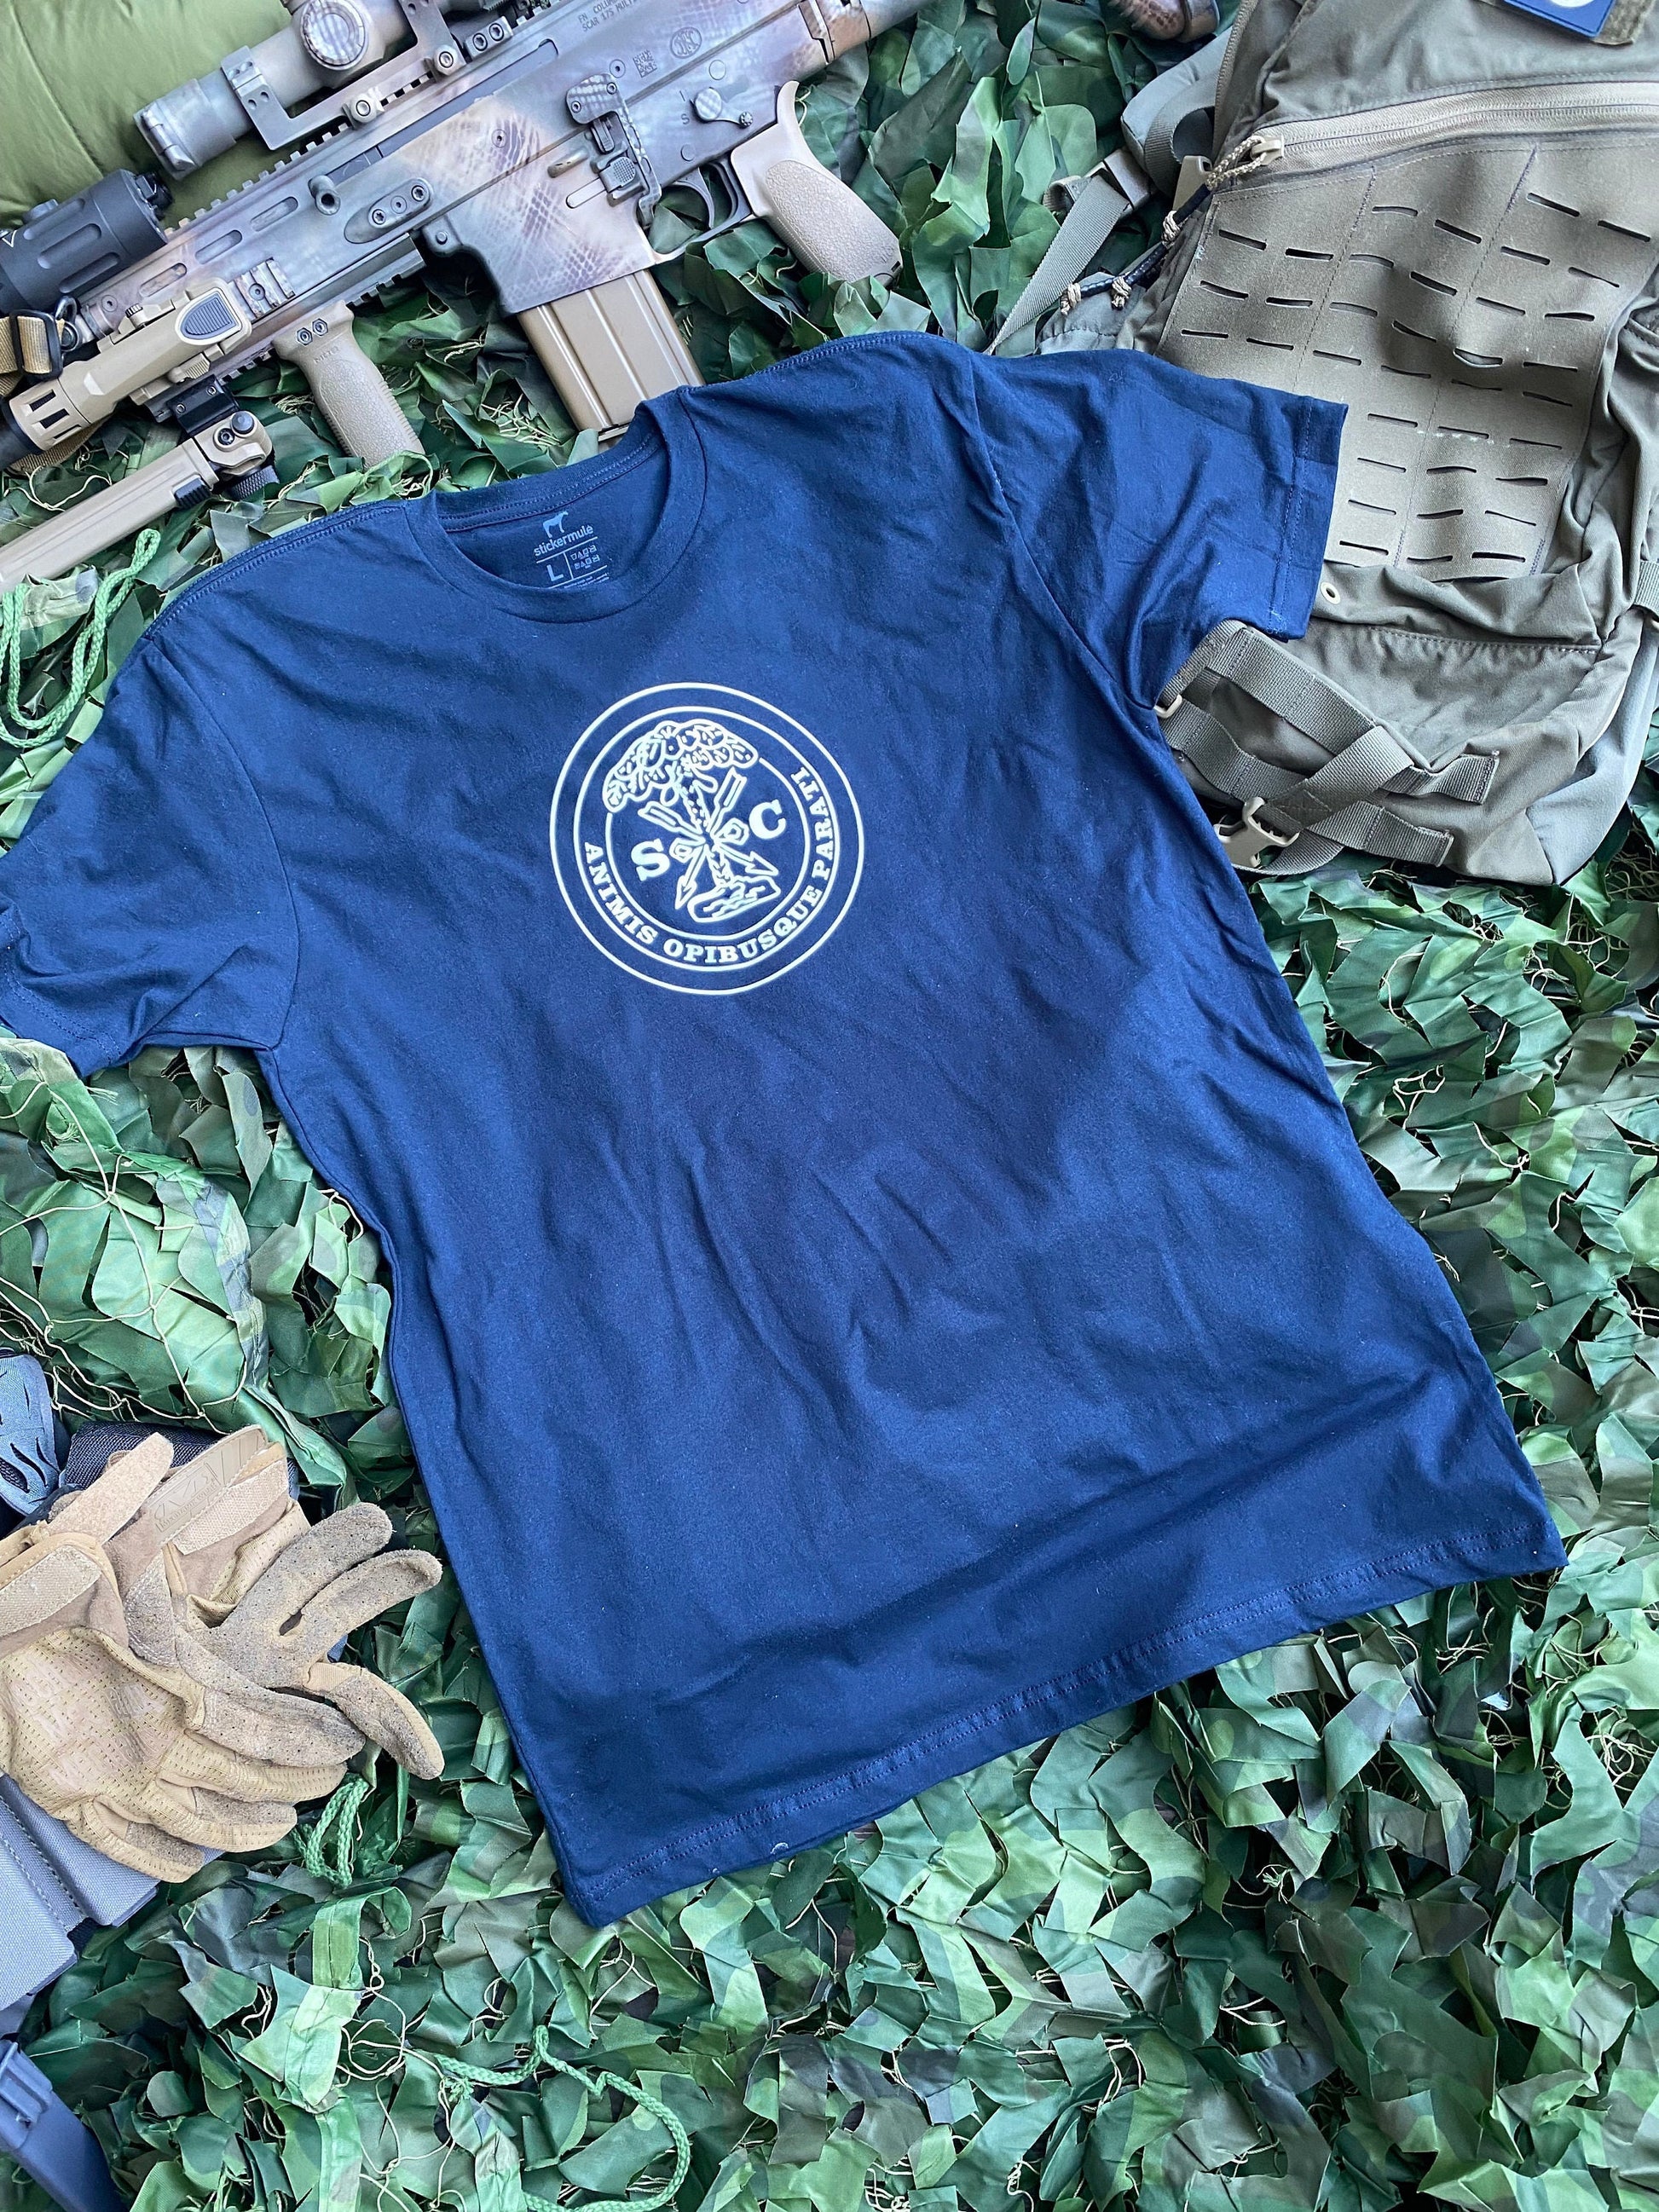 South Carolina Civil War State "Button" Blue T-Shirt